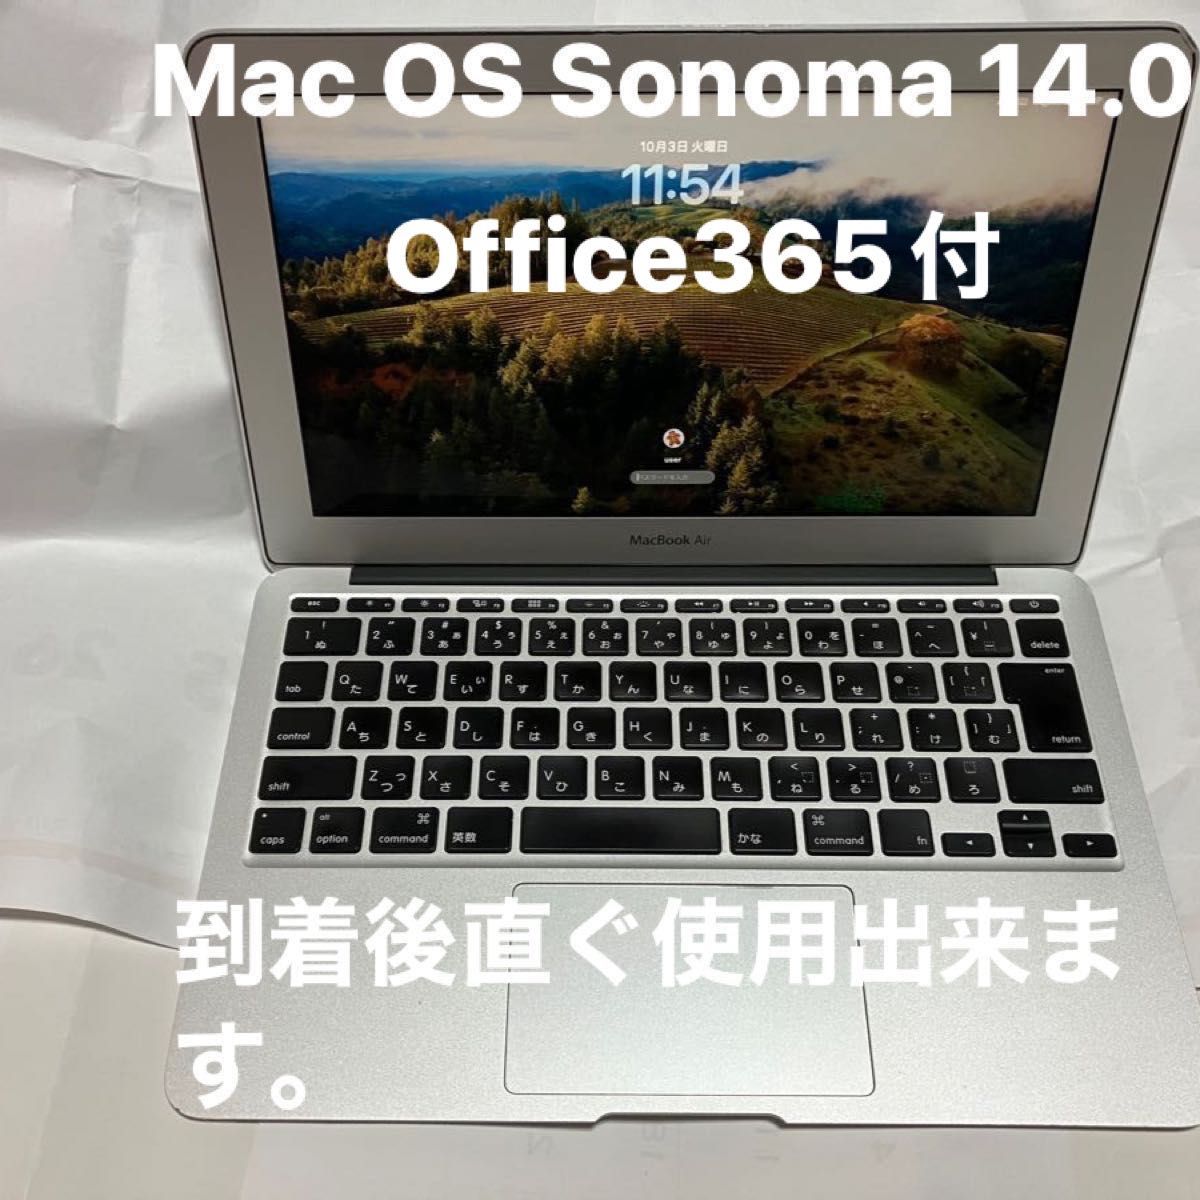 Macbook air 11インチ 2013 Mac OS sonoma14 0最新(office365 ssd128GB